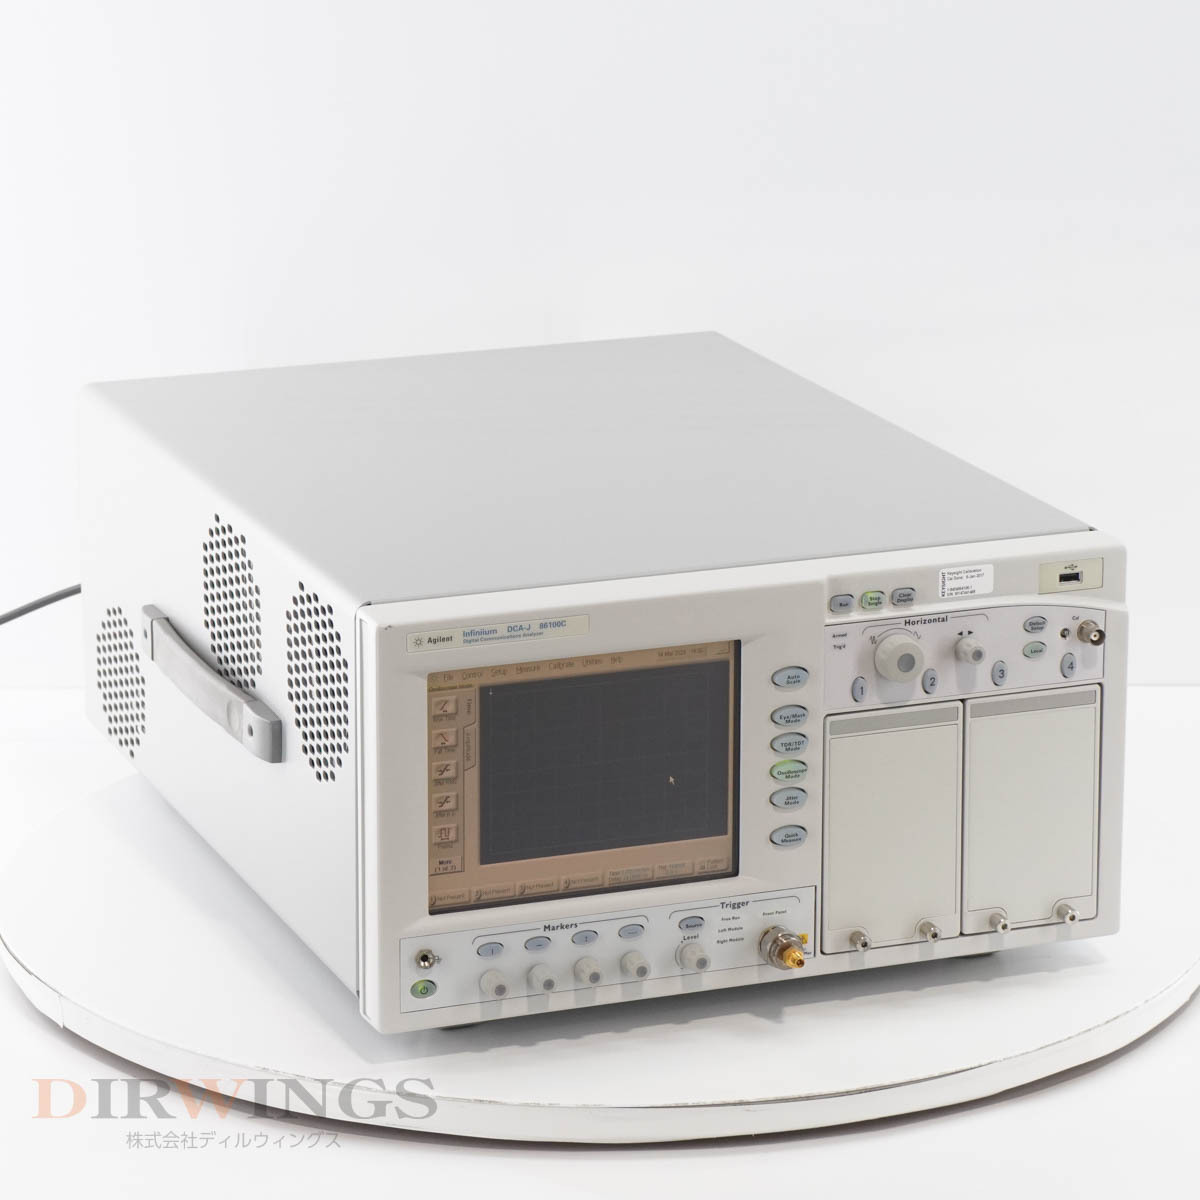 [DW] 8日保証 DCA-J 86100C infiniium Agilent Digital Communications Analyzer Oscilloscope OPT 001 092 hp Keysight キ...[05791-0041]の画像1